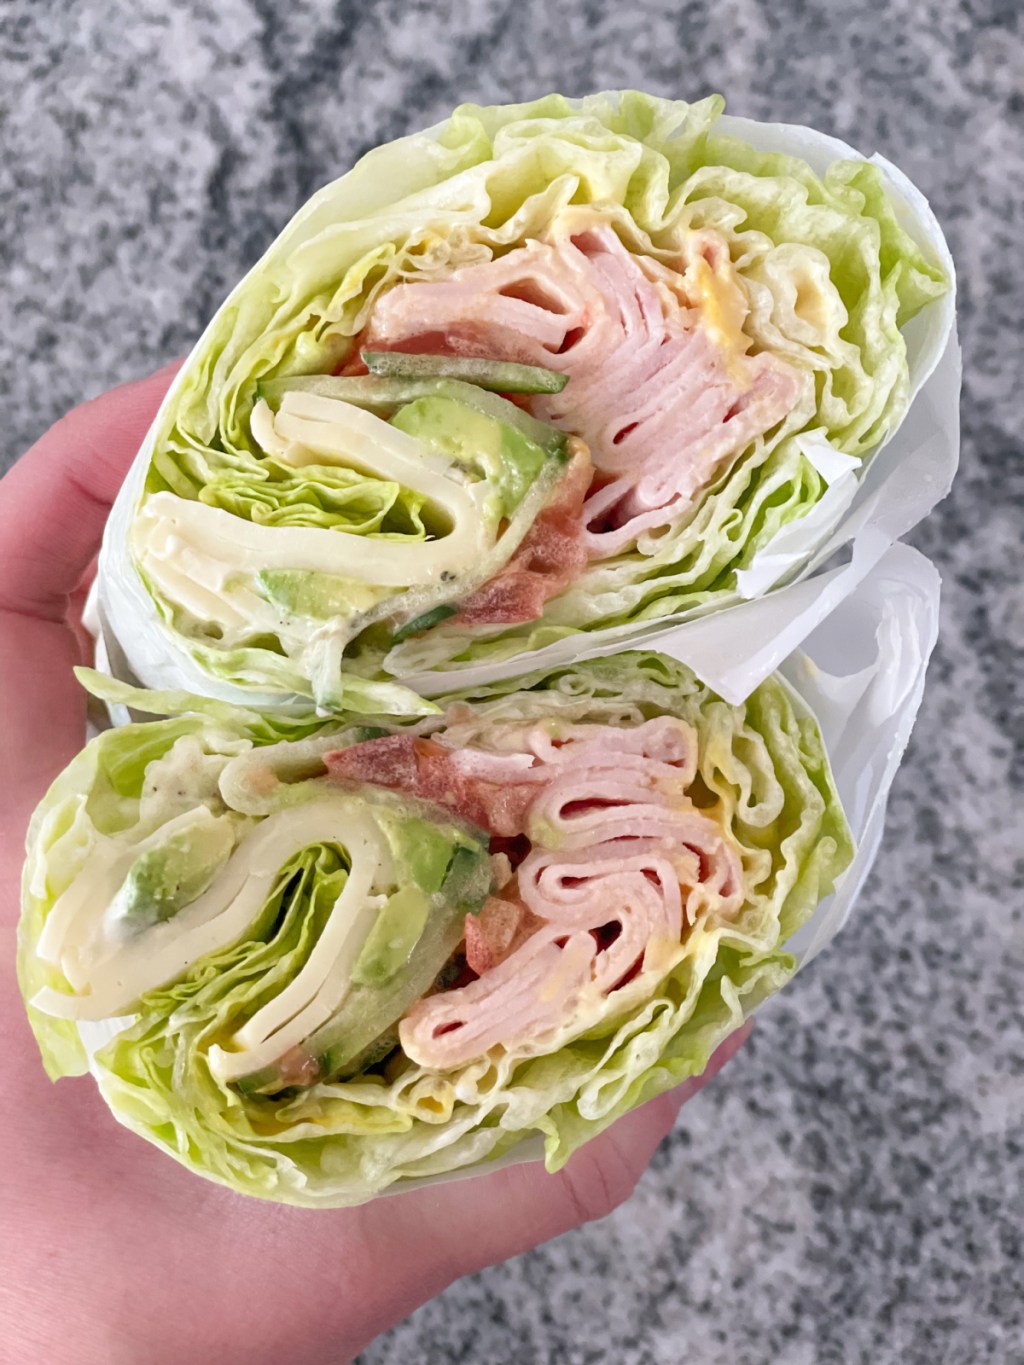 holding cut in half Jimmy John's unwich showing insides of the lettuce wrap